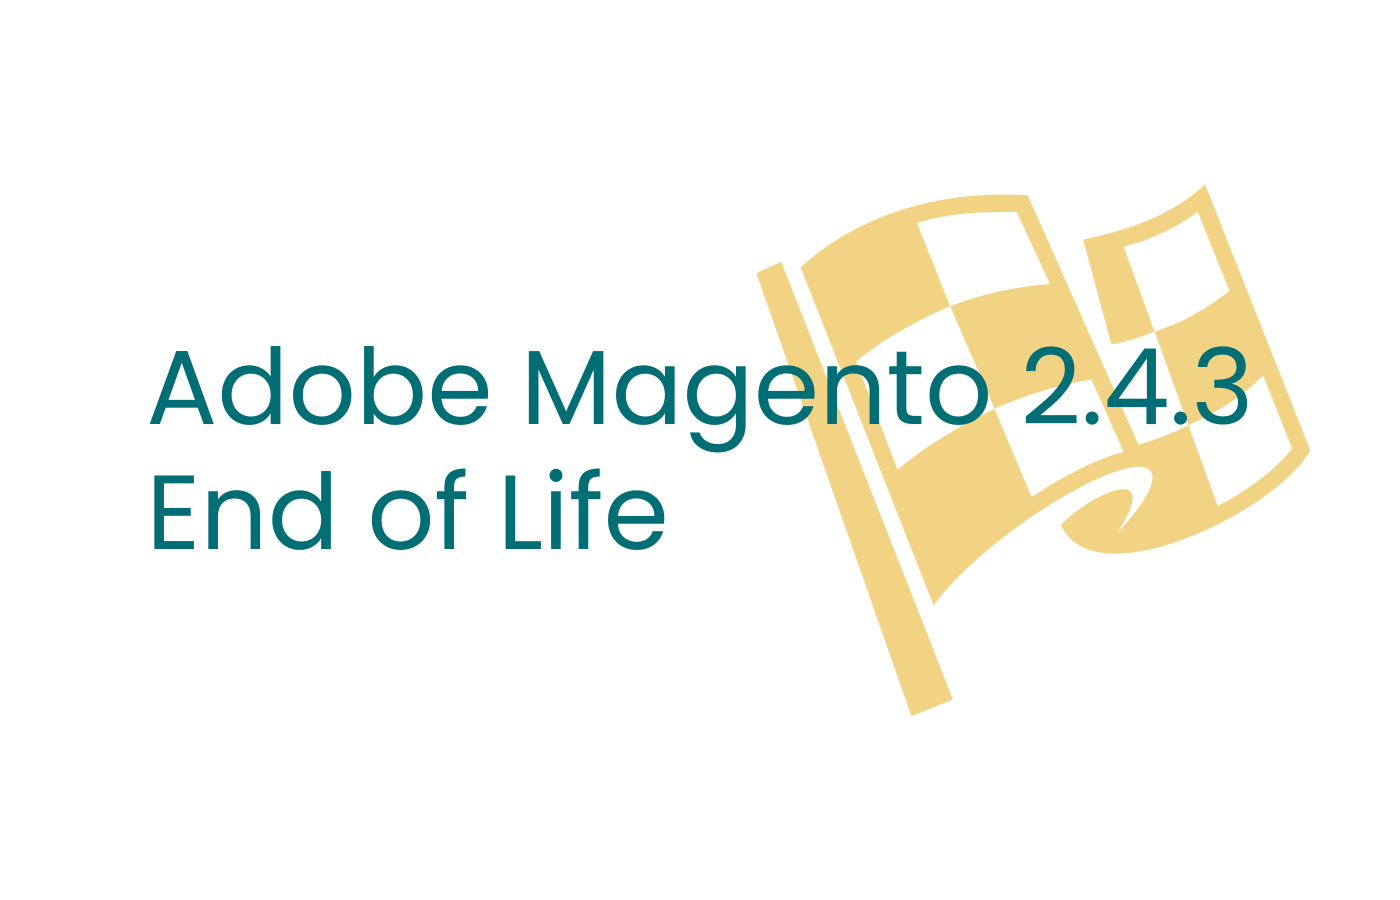 Adobe Magento 2.4.3 EOL